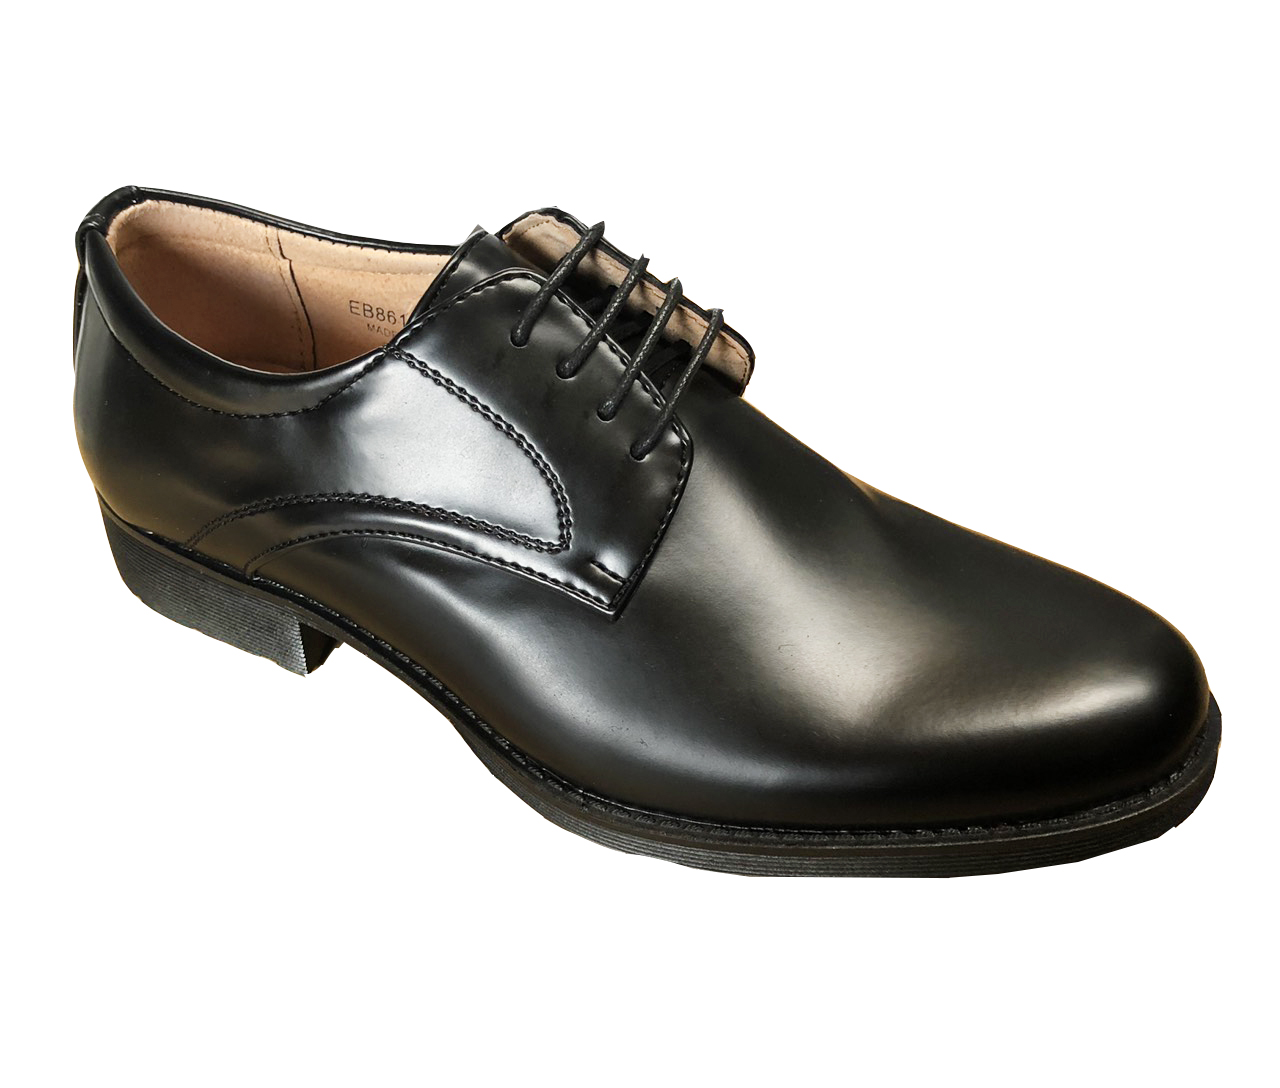 EB8612 學生皮鞋, 黑色-27cm, large